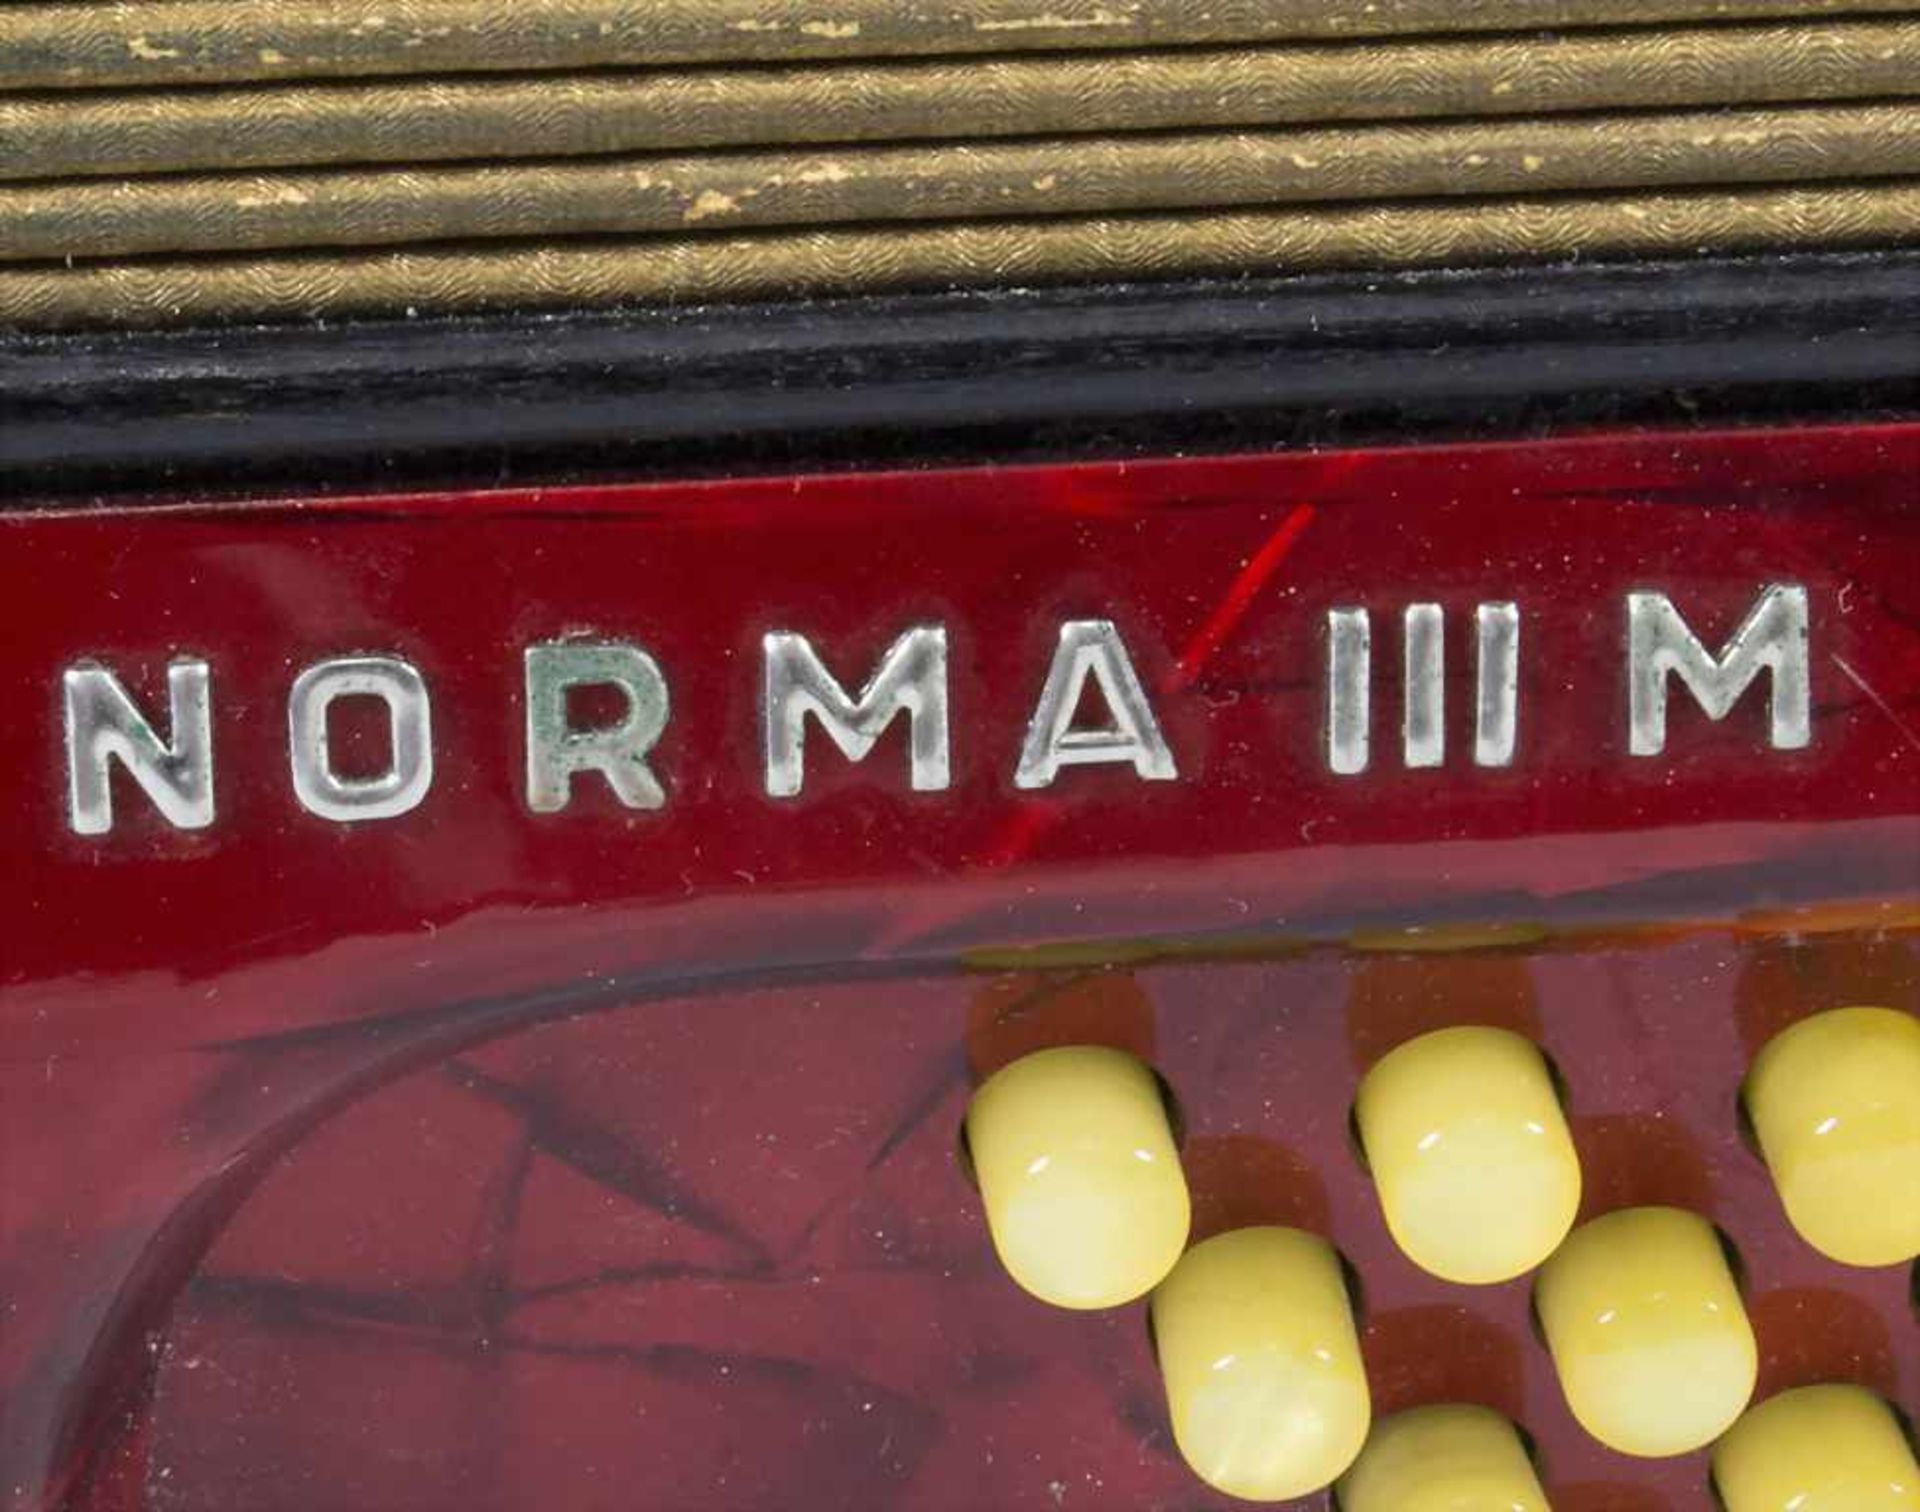 Akkordeon 'Norma III M' / An accordion 'Norma III M', HohnerBeschreibung: rot marmorie - Image 3 of 5